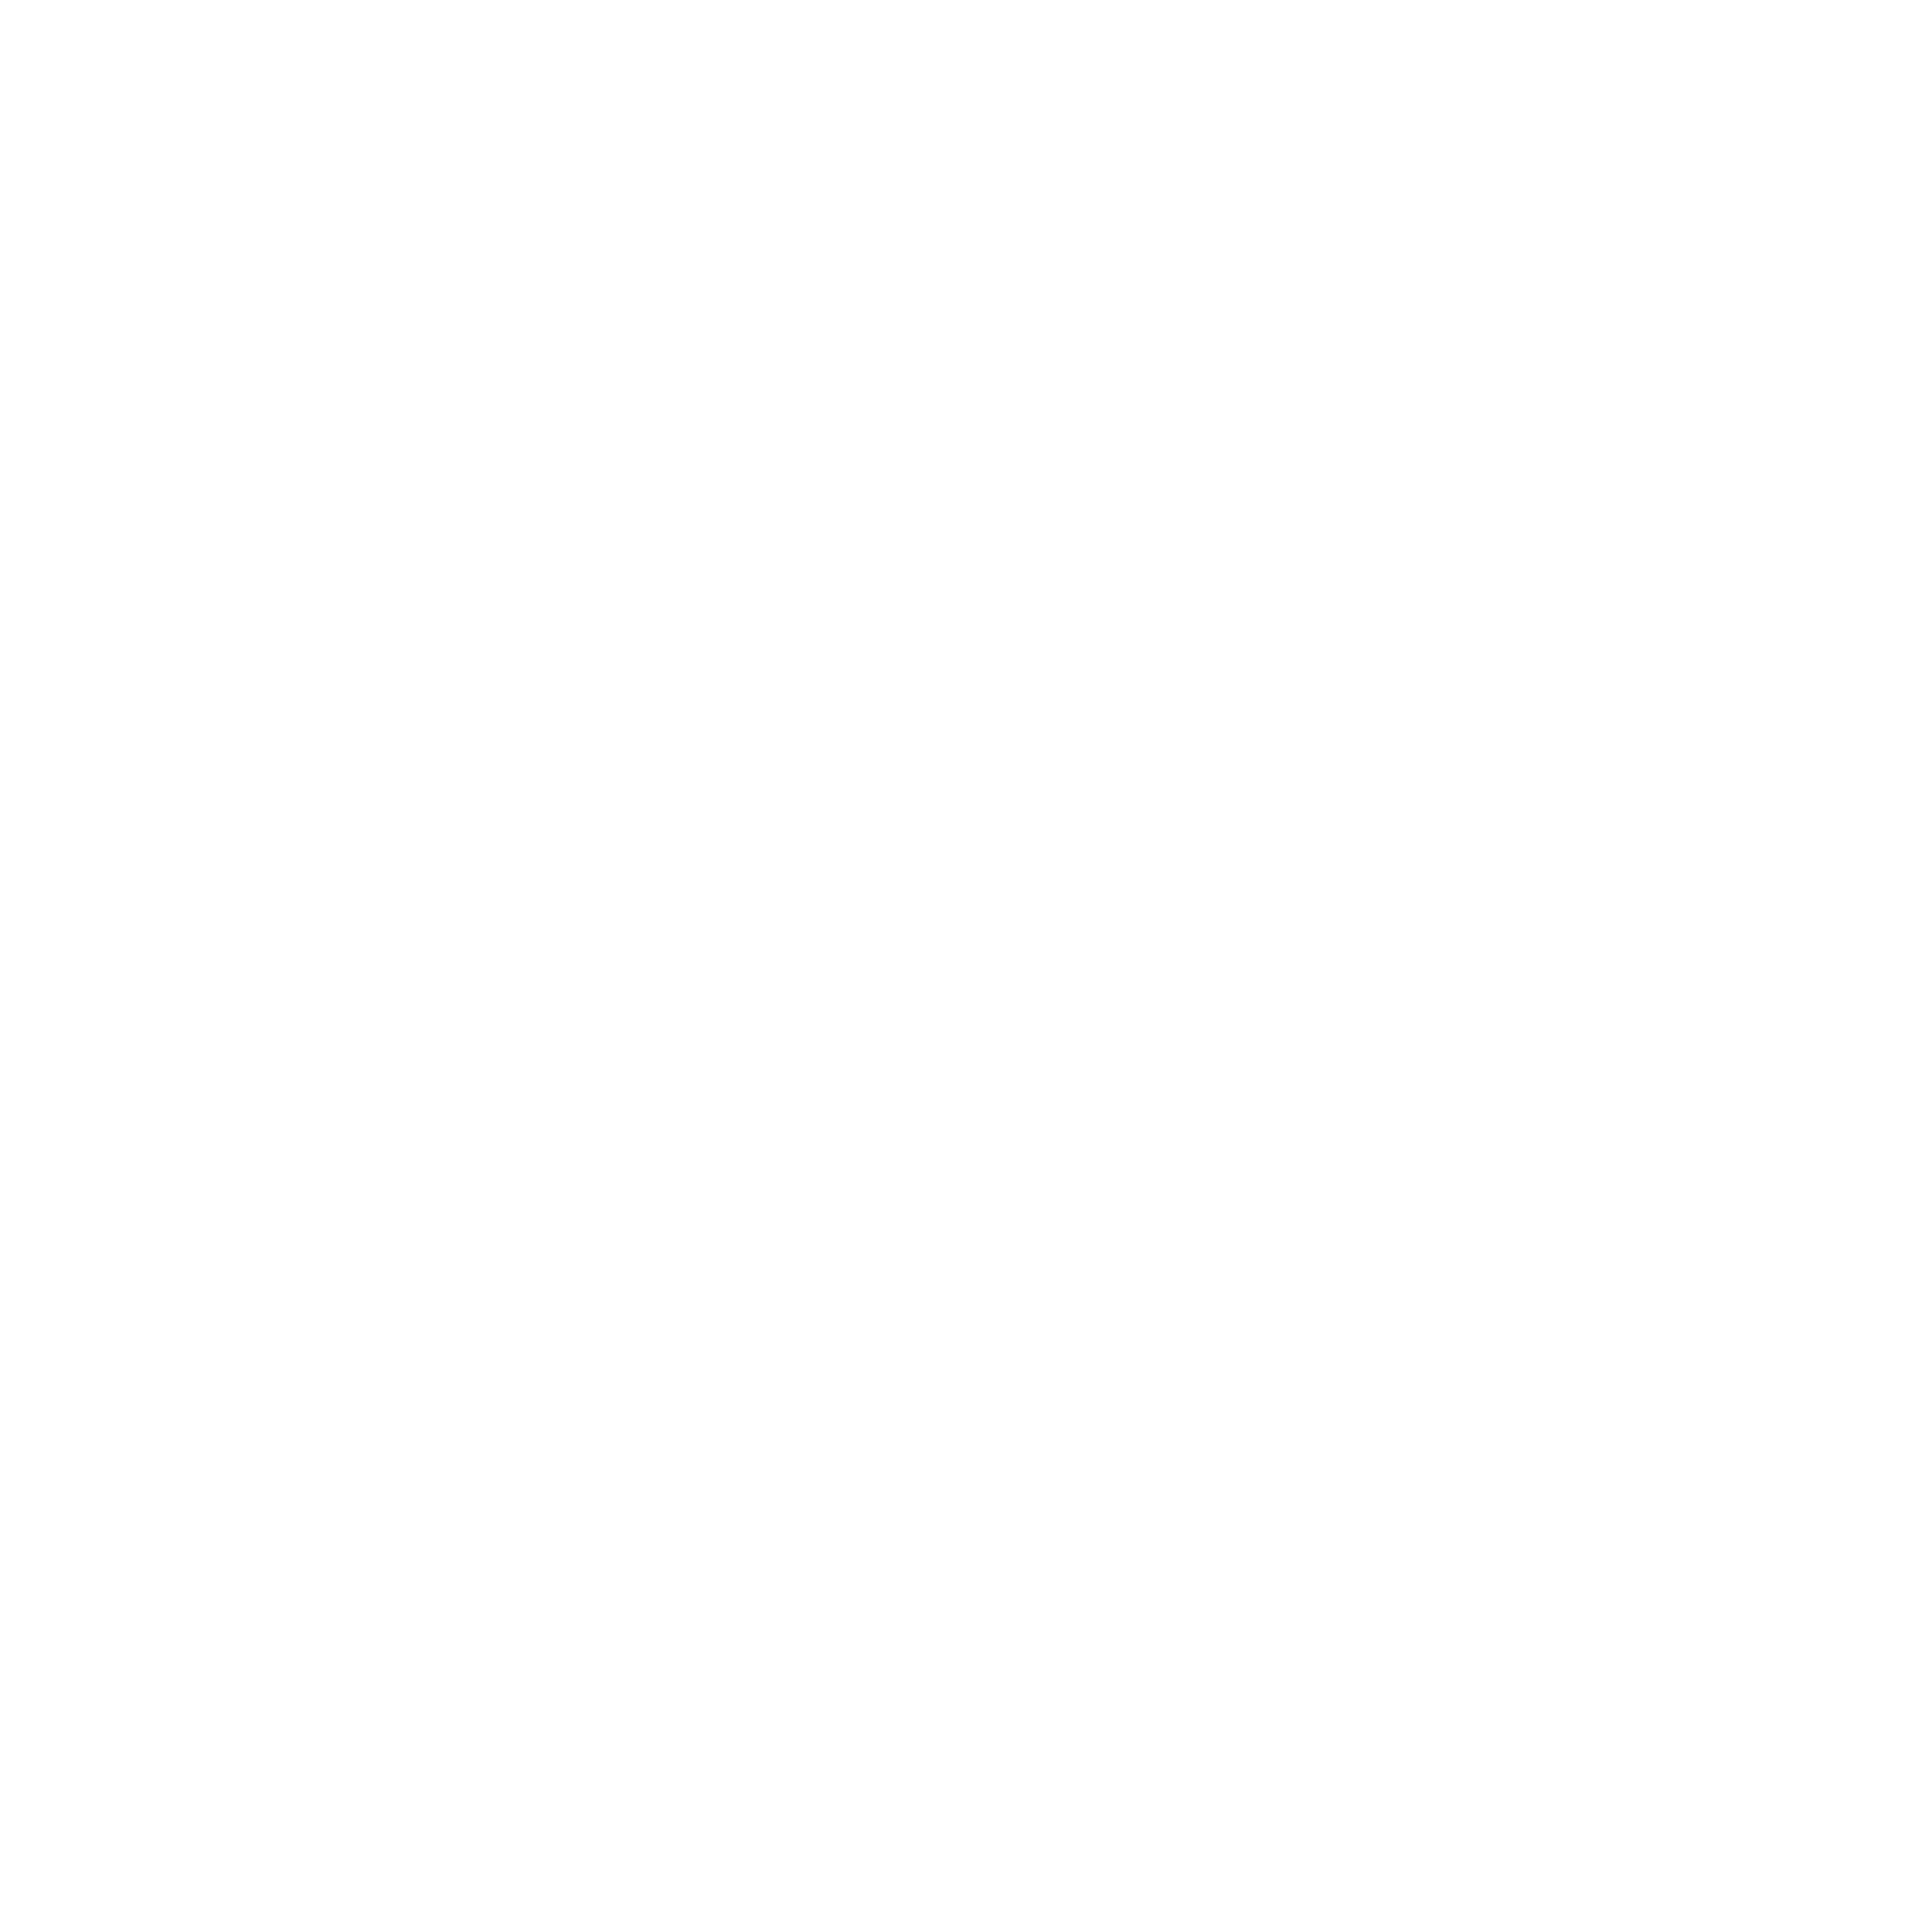 Buzz Honey